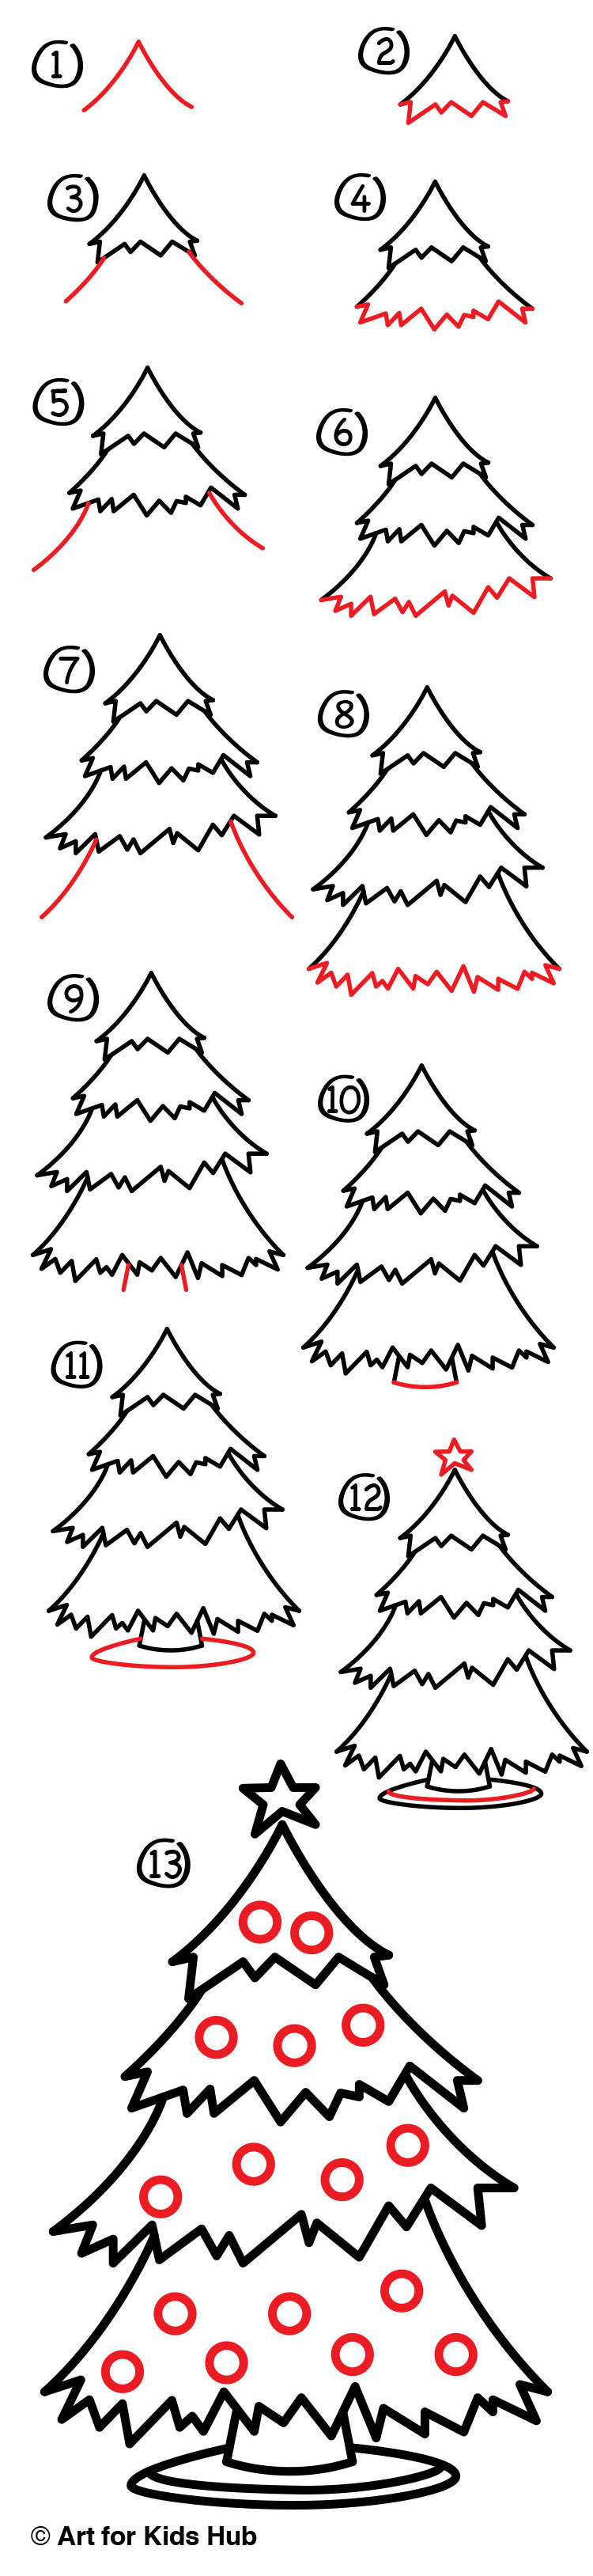 How To Draw A Christmas Tree - Art For Kids Hub